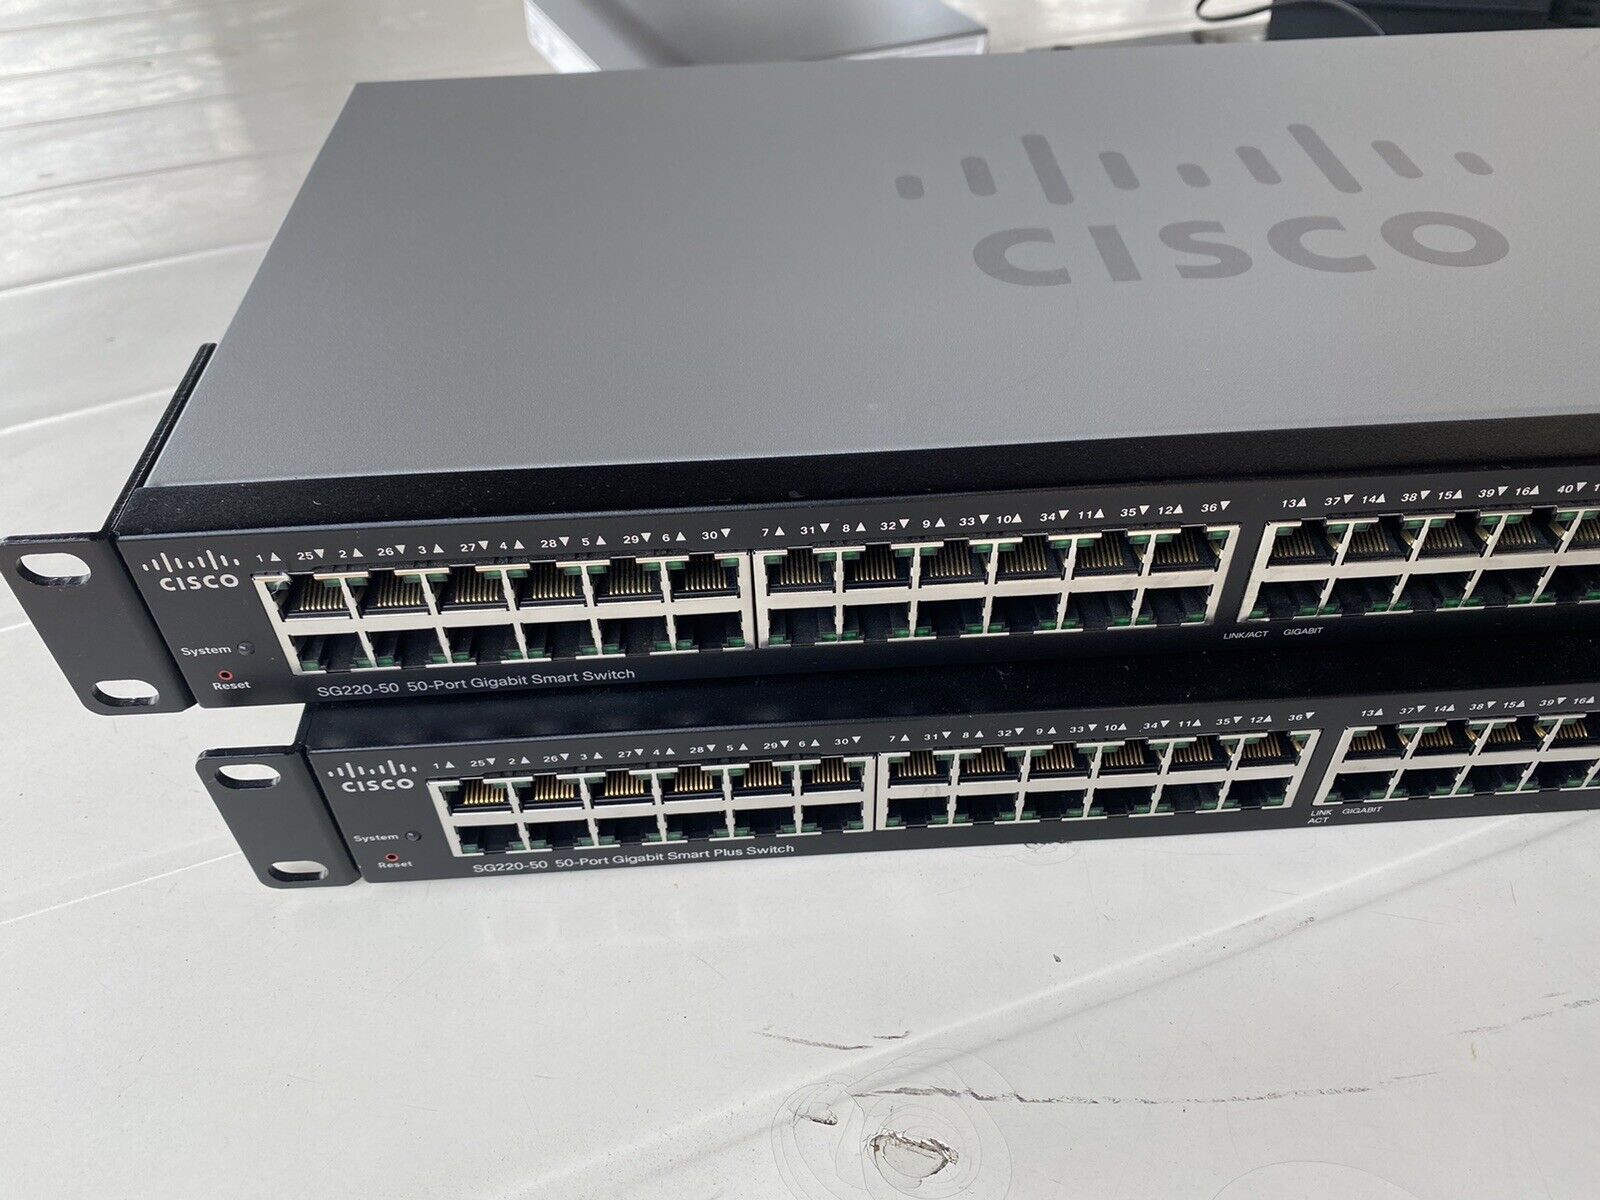 Cisco Managed Switch sG220-50